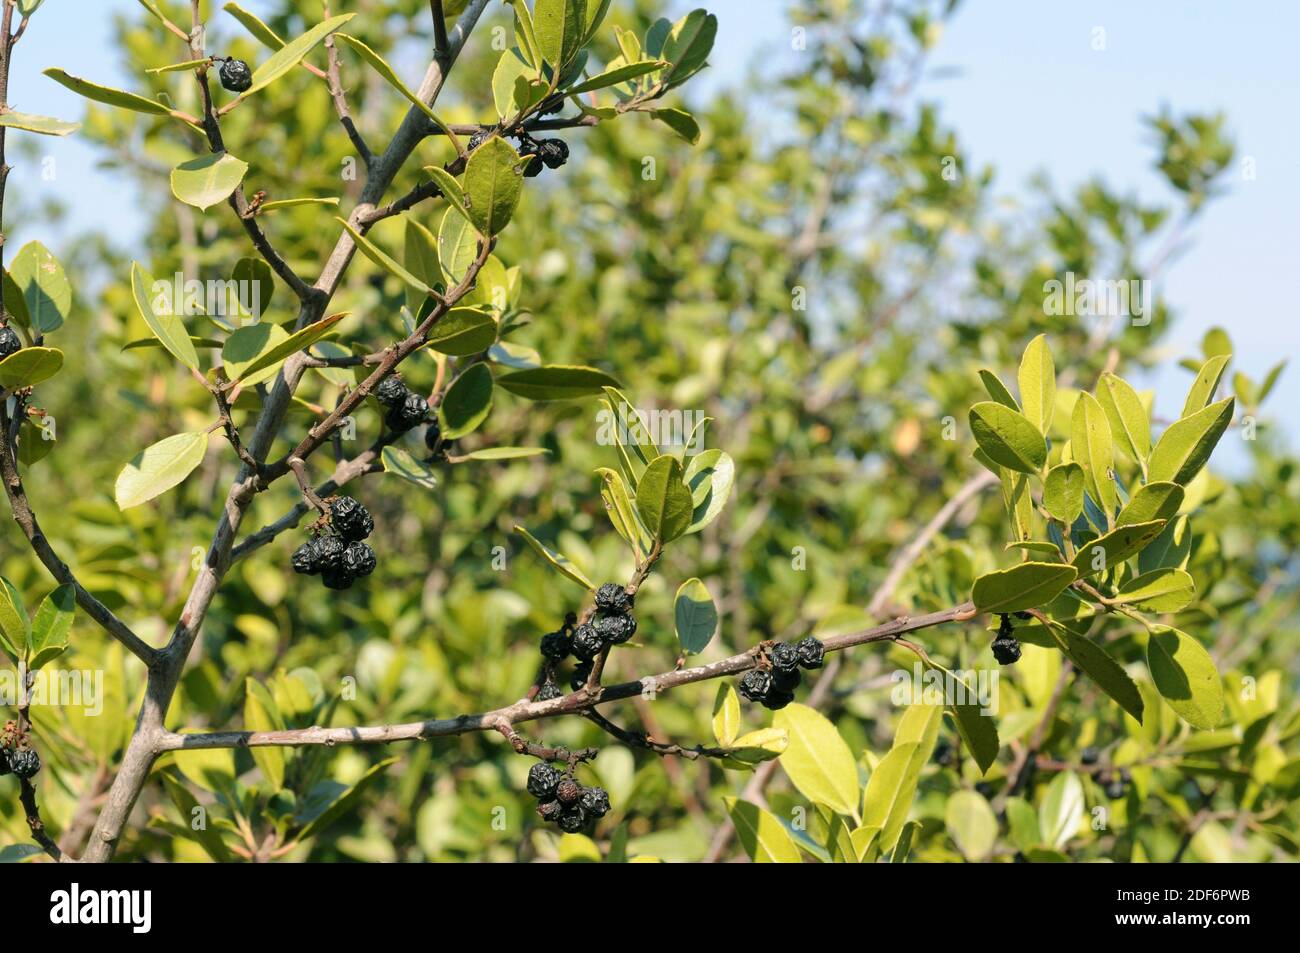 Mediterranean buckthorn (Rhamnus alaternus) is an evergreen shrub native to Mediterranean Basin. Mature fruits and leaves detail. This photo was Stock Photo